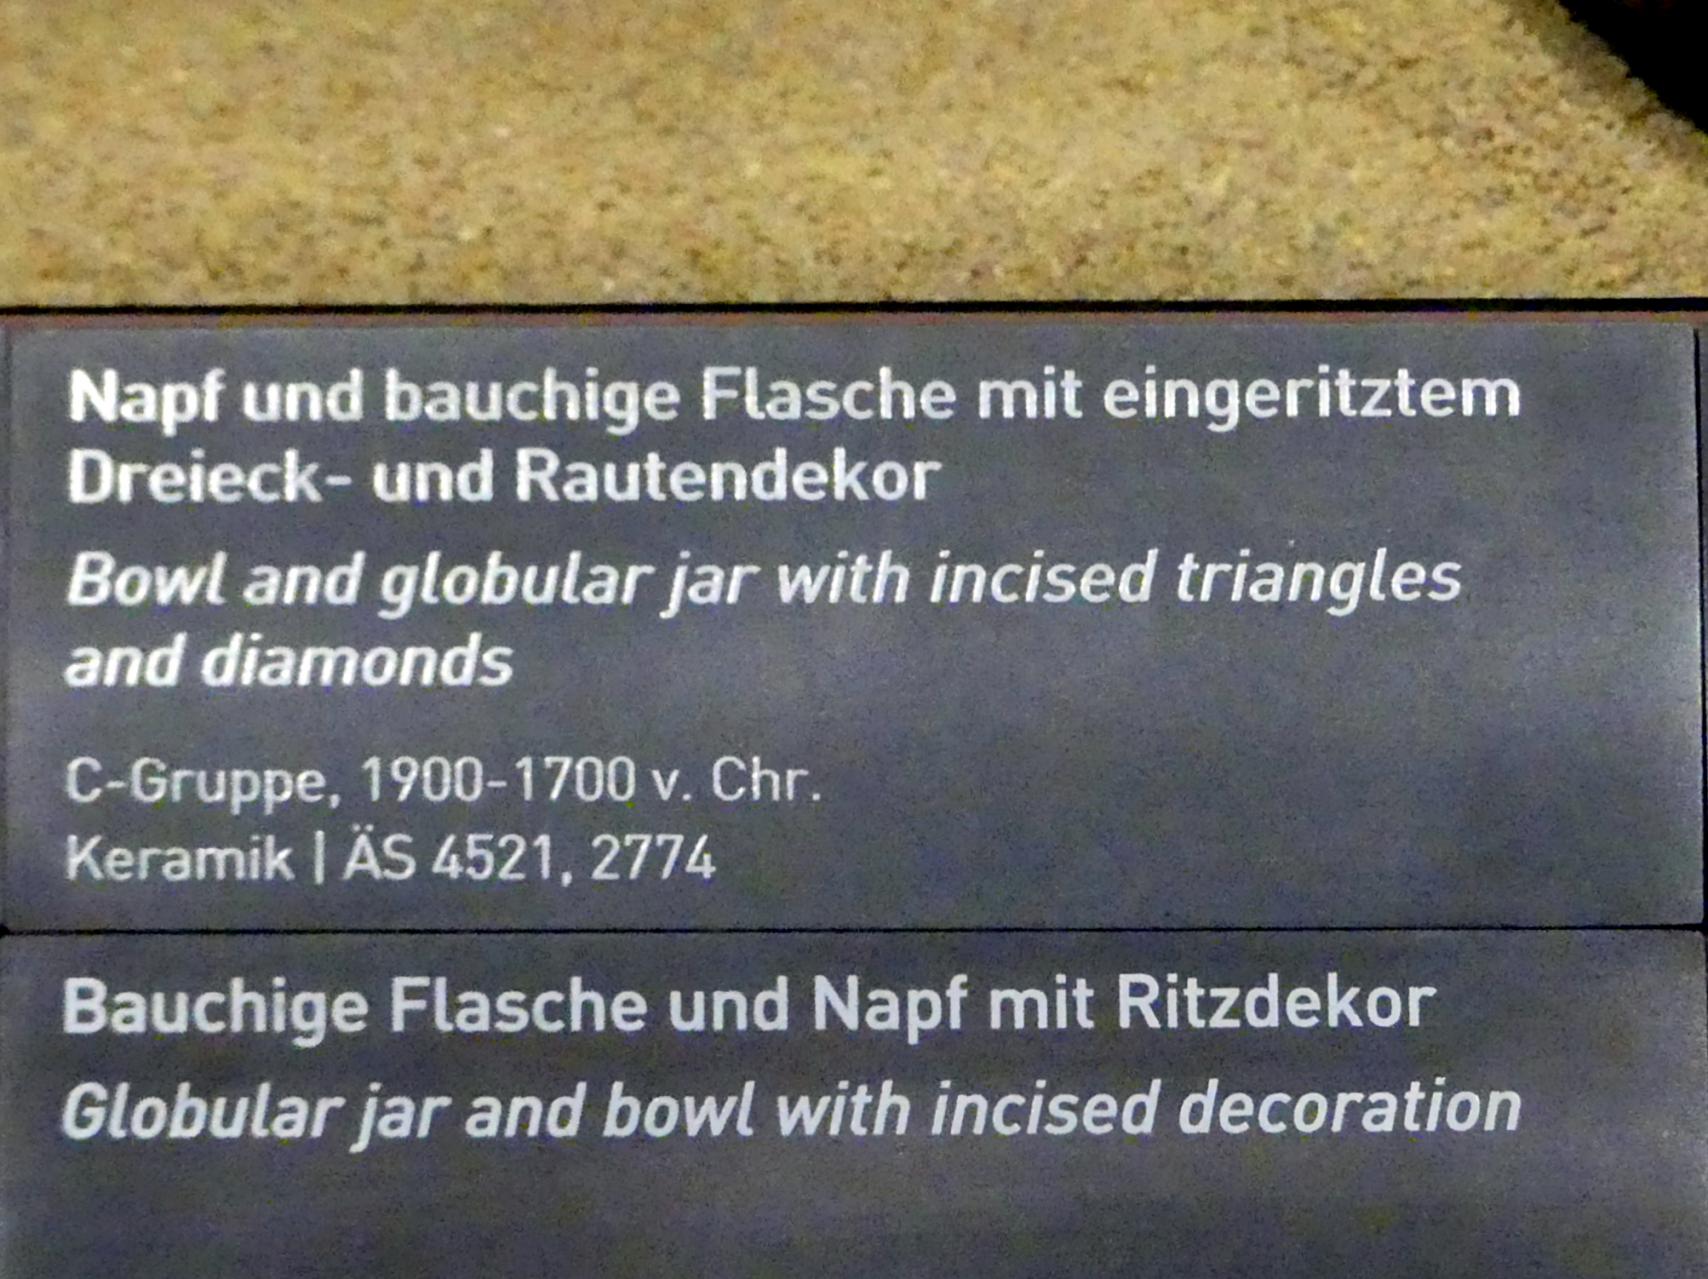 Napf mit eingeritztem Dreieckdekor, C-Gruppe, 1900 - 1550 v. Chr., 1900 - 1700 v. Chr., Bild 2/2